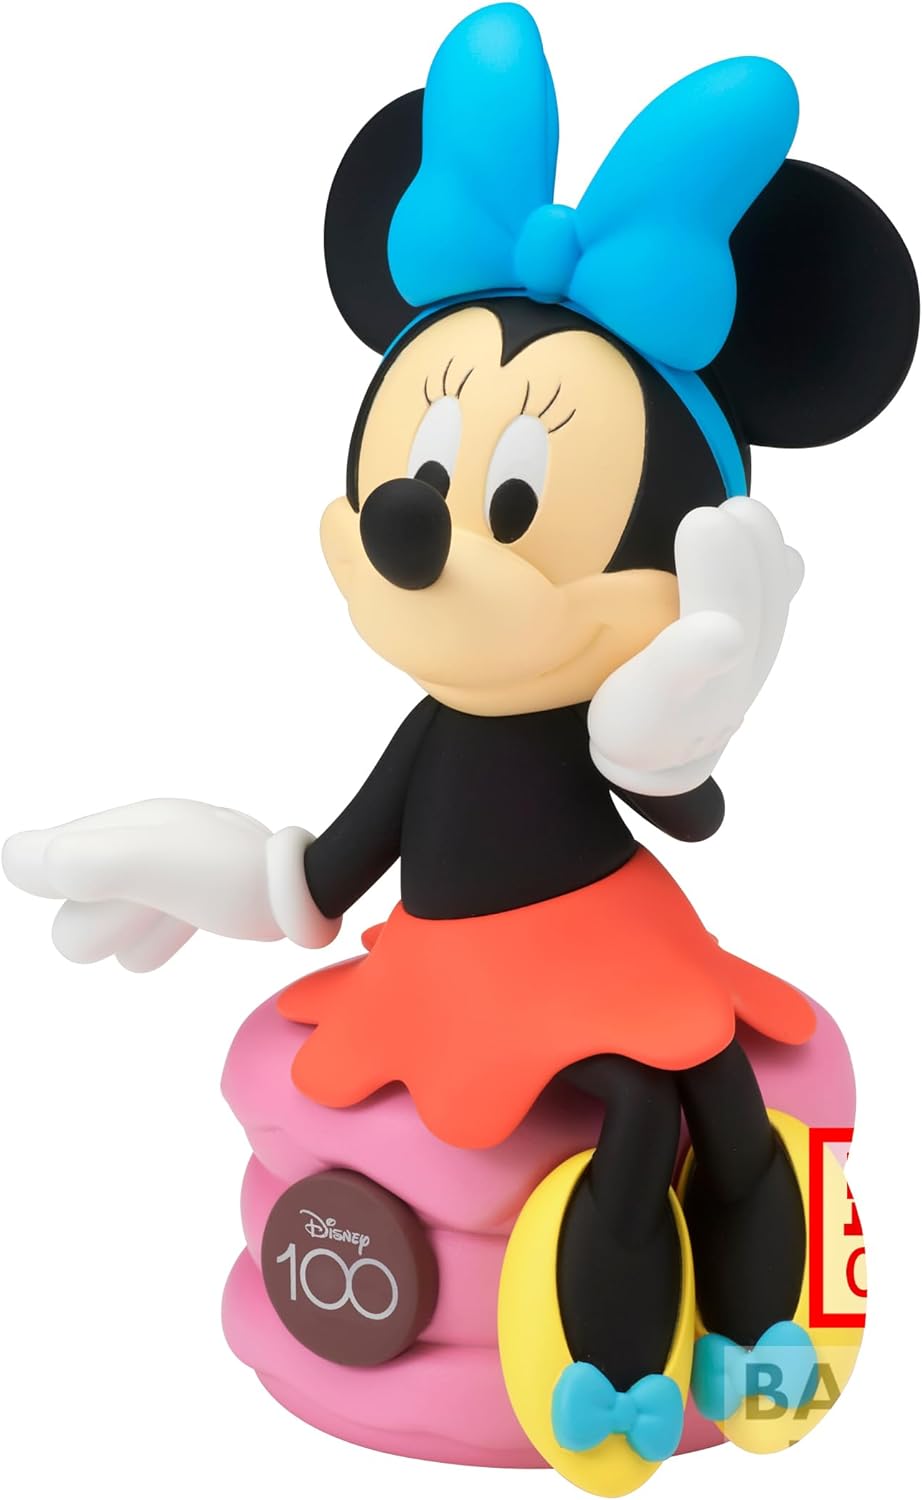 Disney Minnie Mouse 100th Anniversary Sofubi Figure